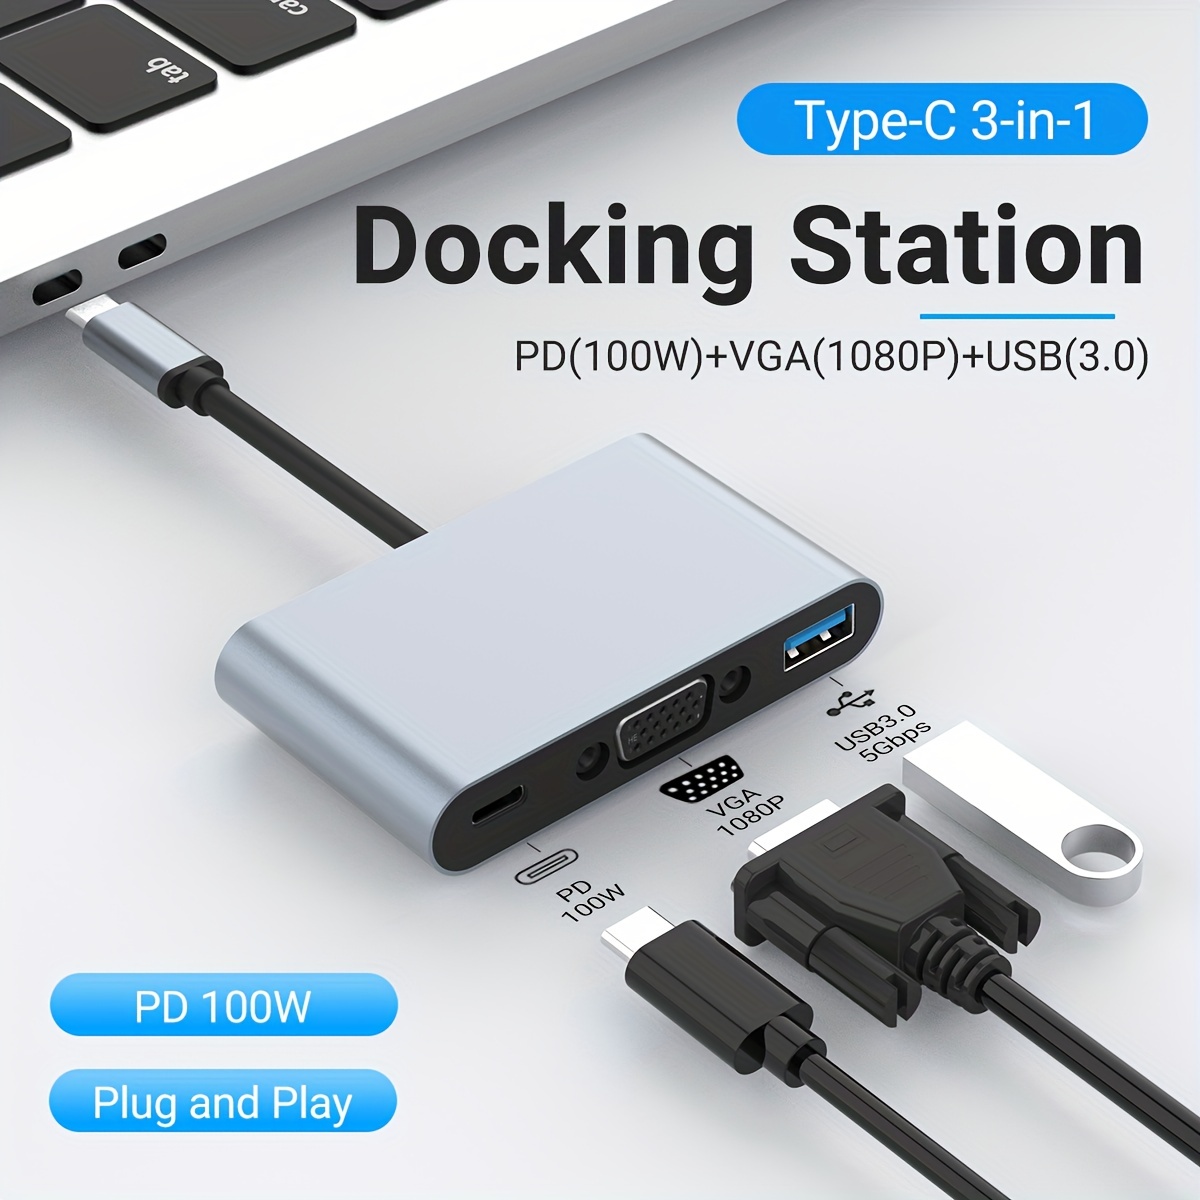 Adaptador Gráfico USB-C a HDMI 4K30Hz - Conversor de Vídeo USB 3.1 Tipo C a  HDMI - Compatible Thunderbolt 3 - Dongle